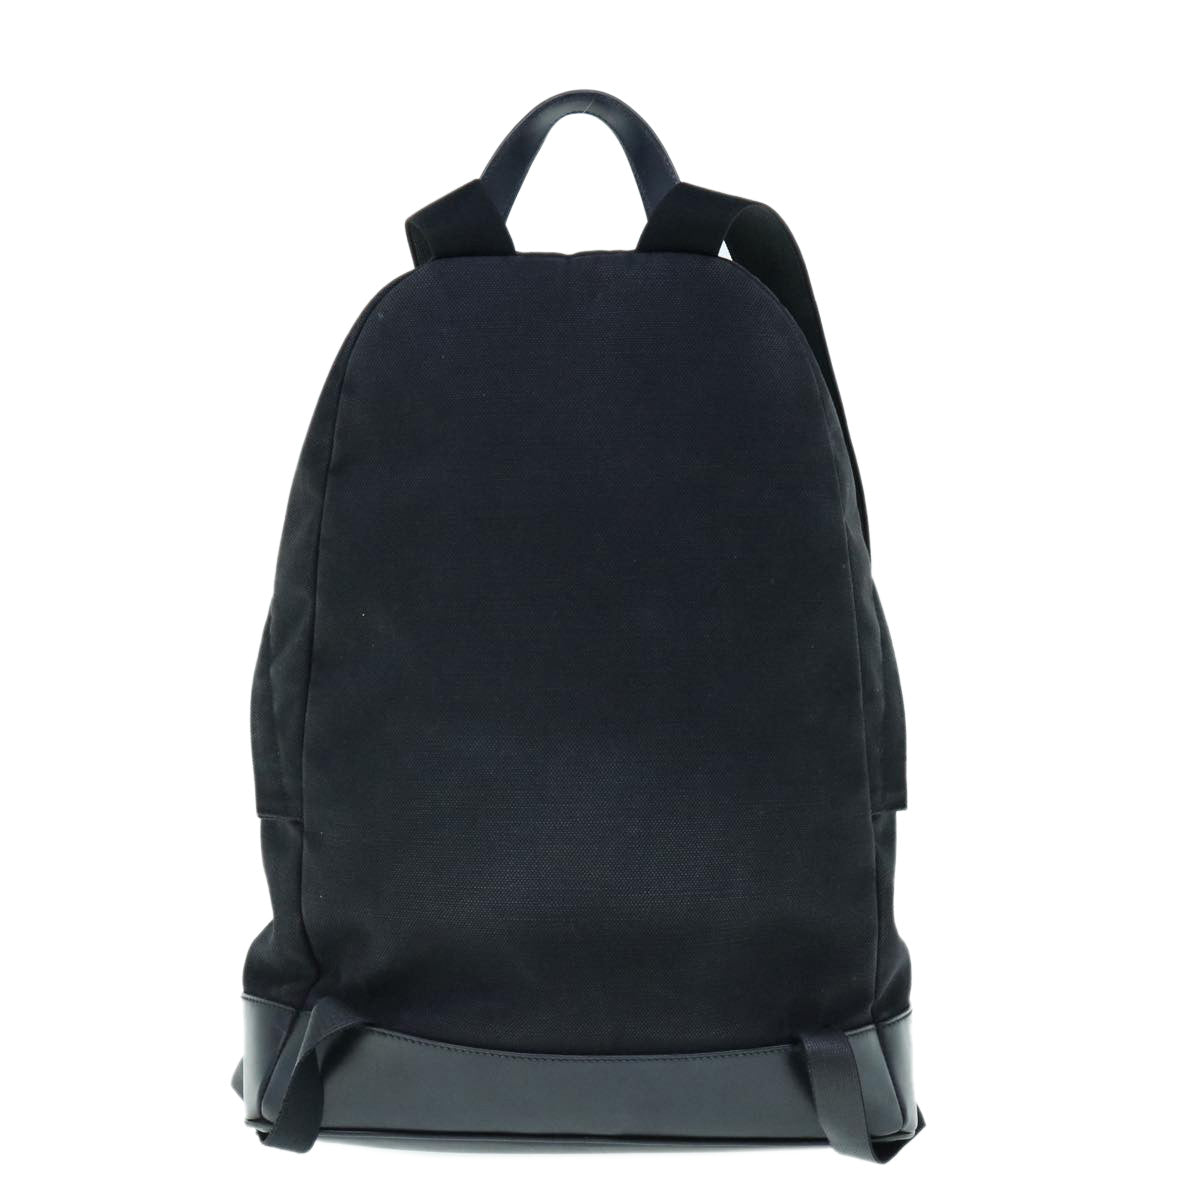 BALENCIAGA Backpack Canvas Black 392007 Auth bs10913